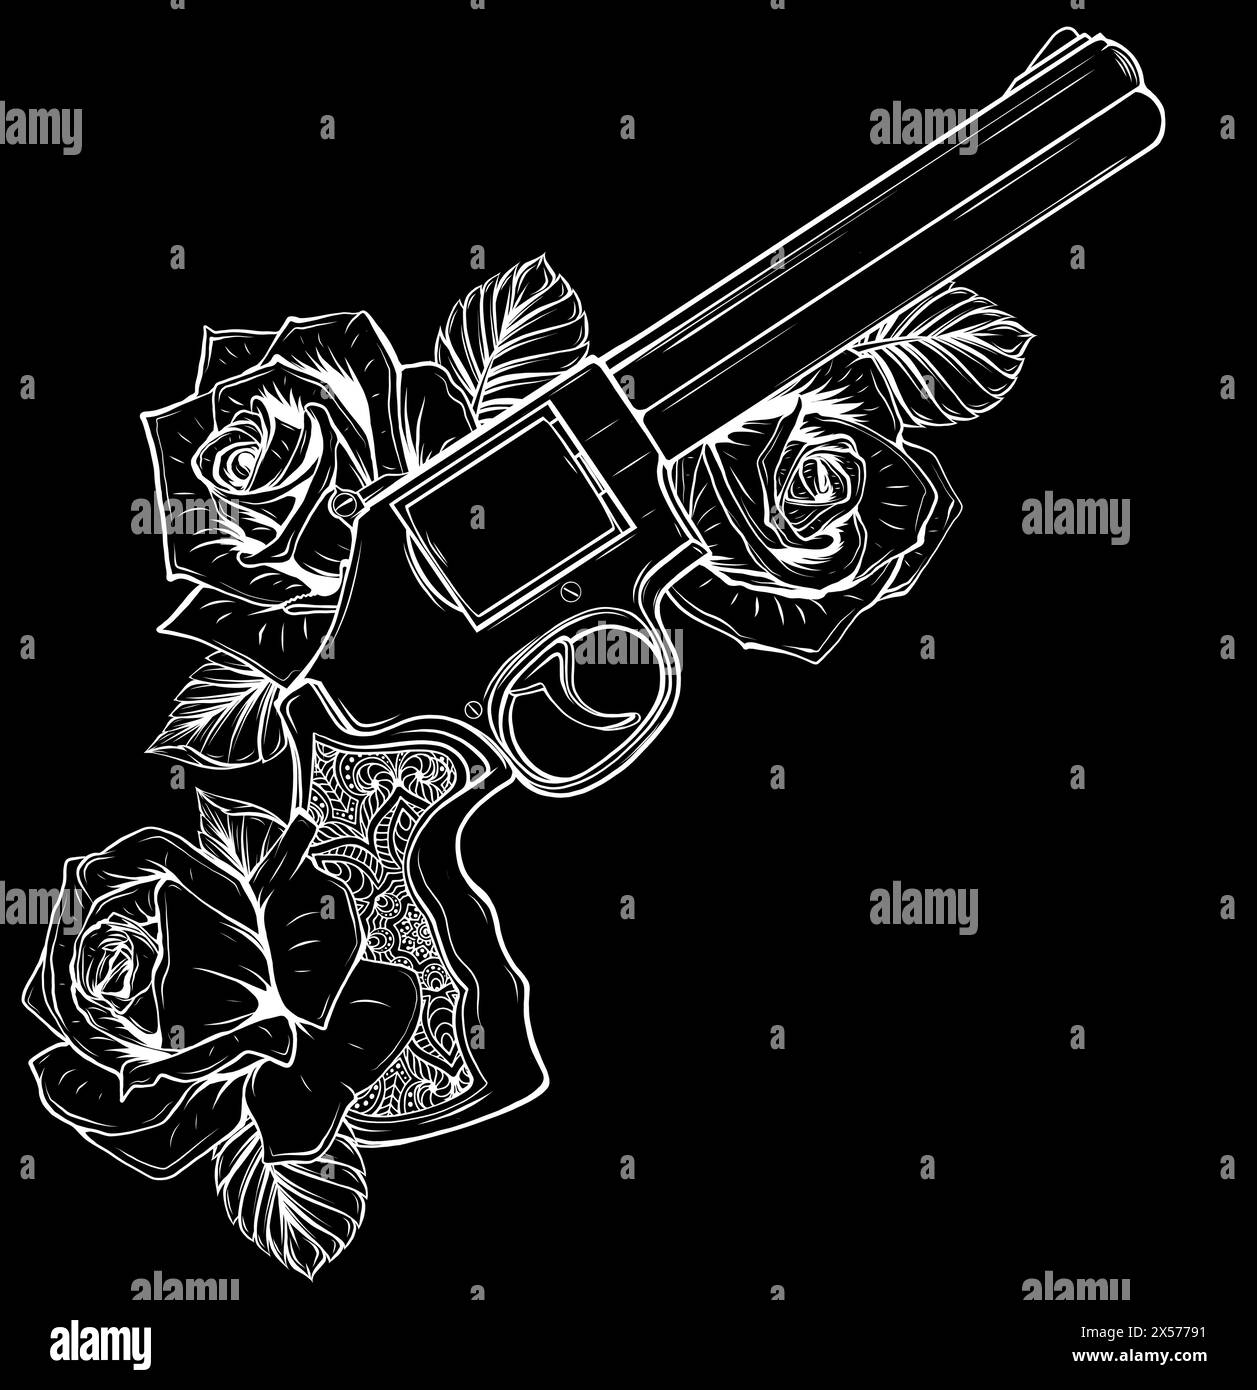 white silhouette of Gun and rose on black background illustration Stock Vector